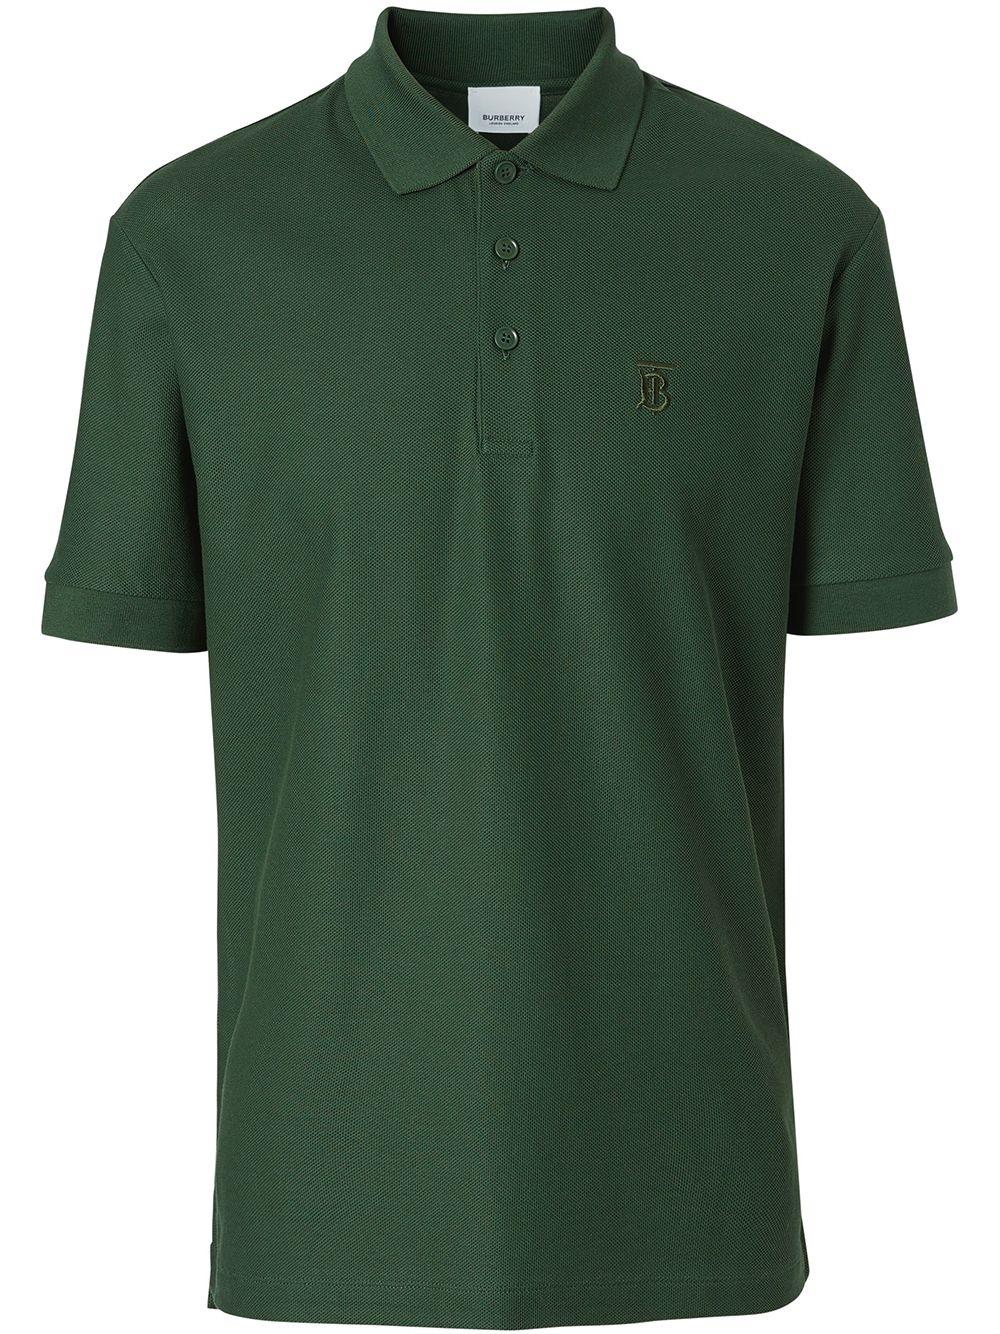 Burberry Monogram Motif Cotton Piqué Polo Shirt in Green for Men - Lyst